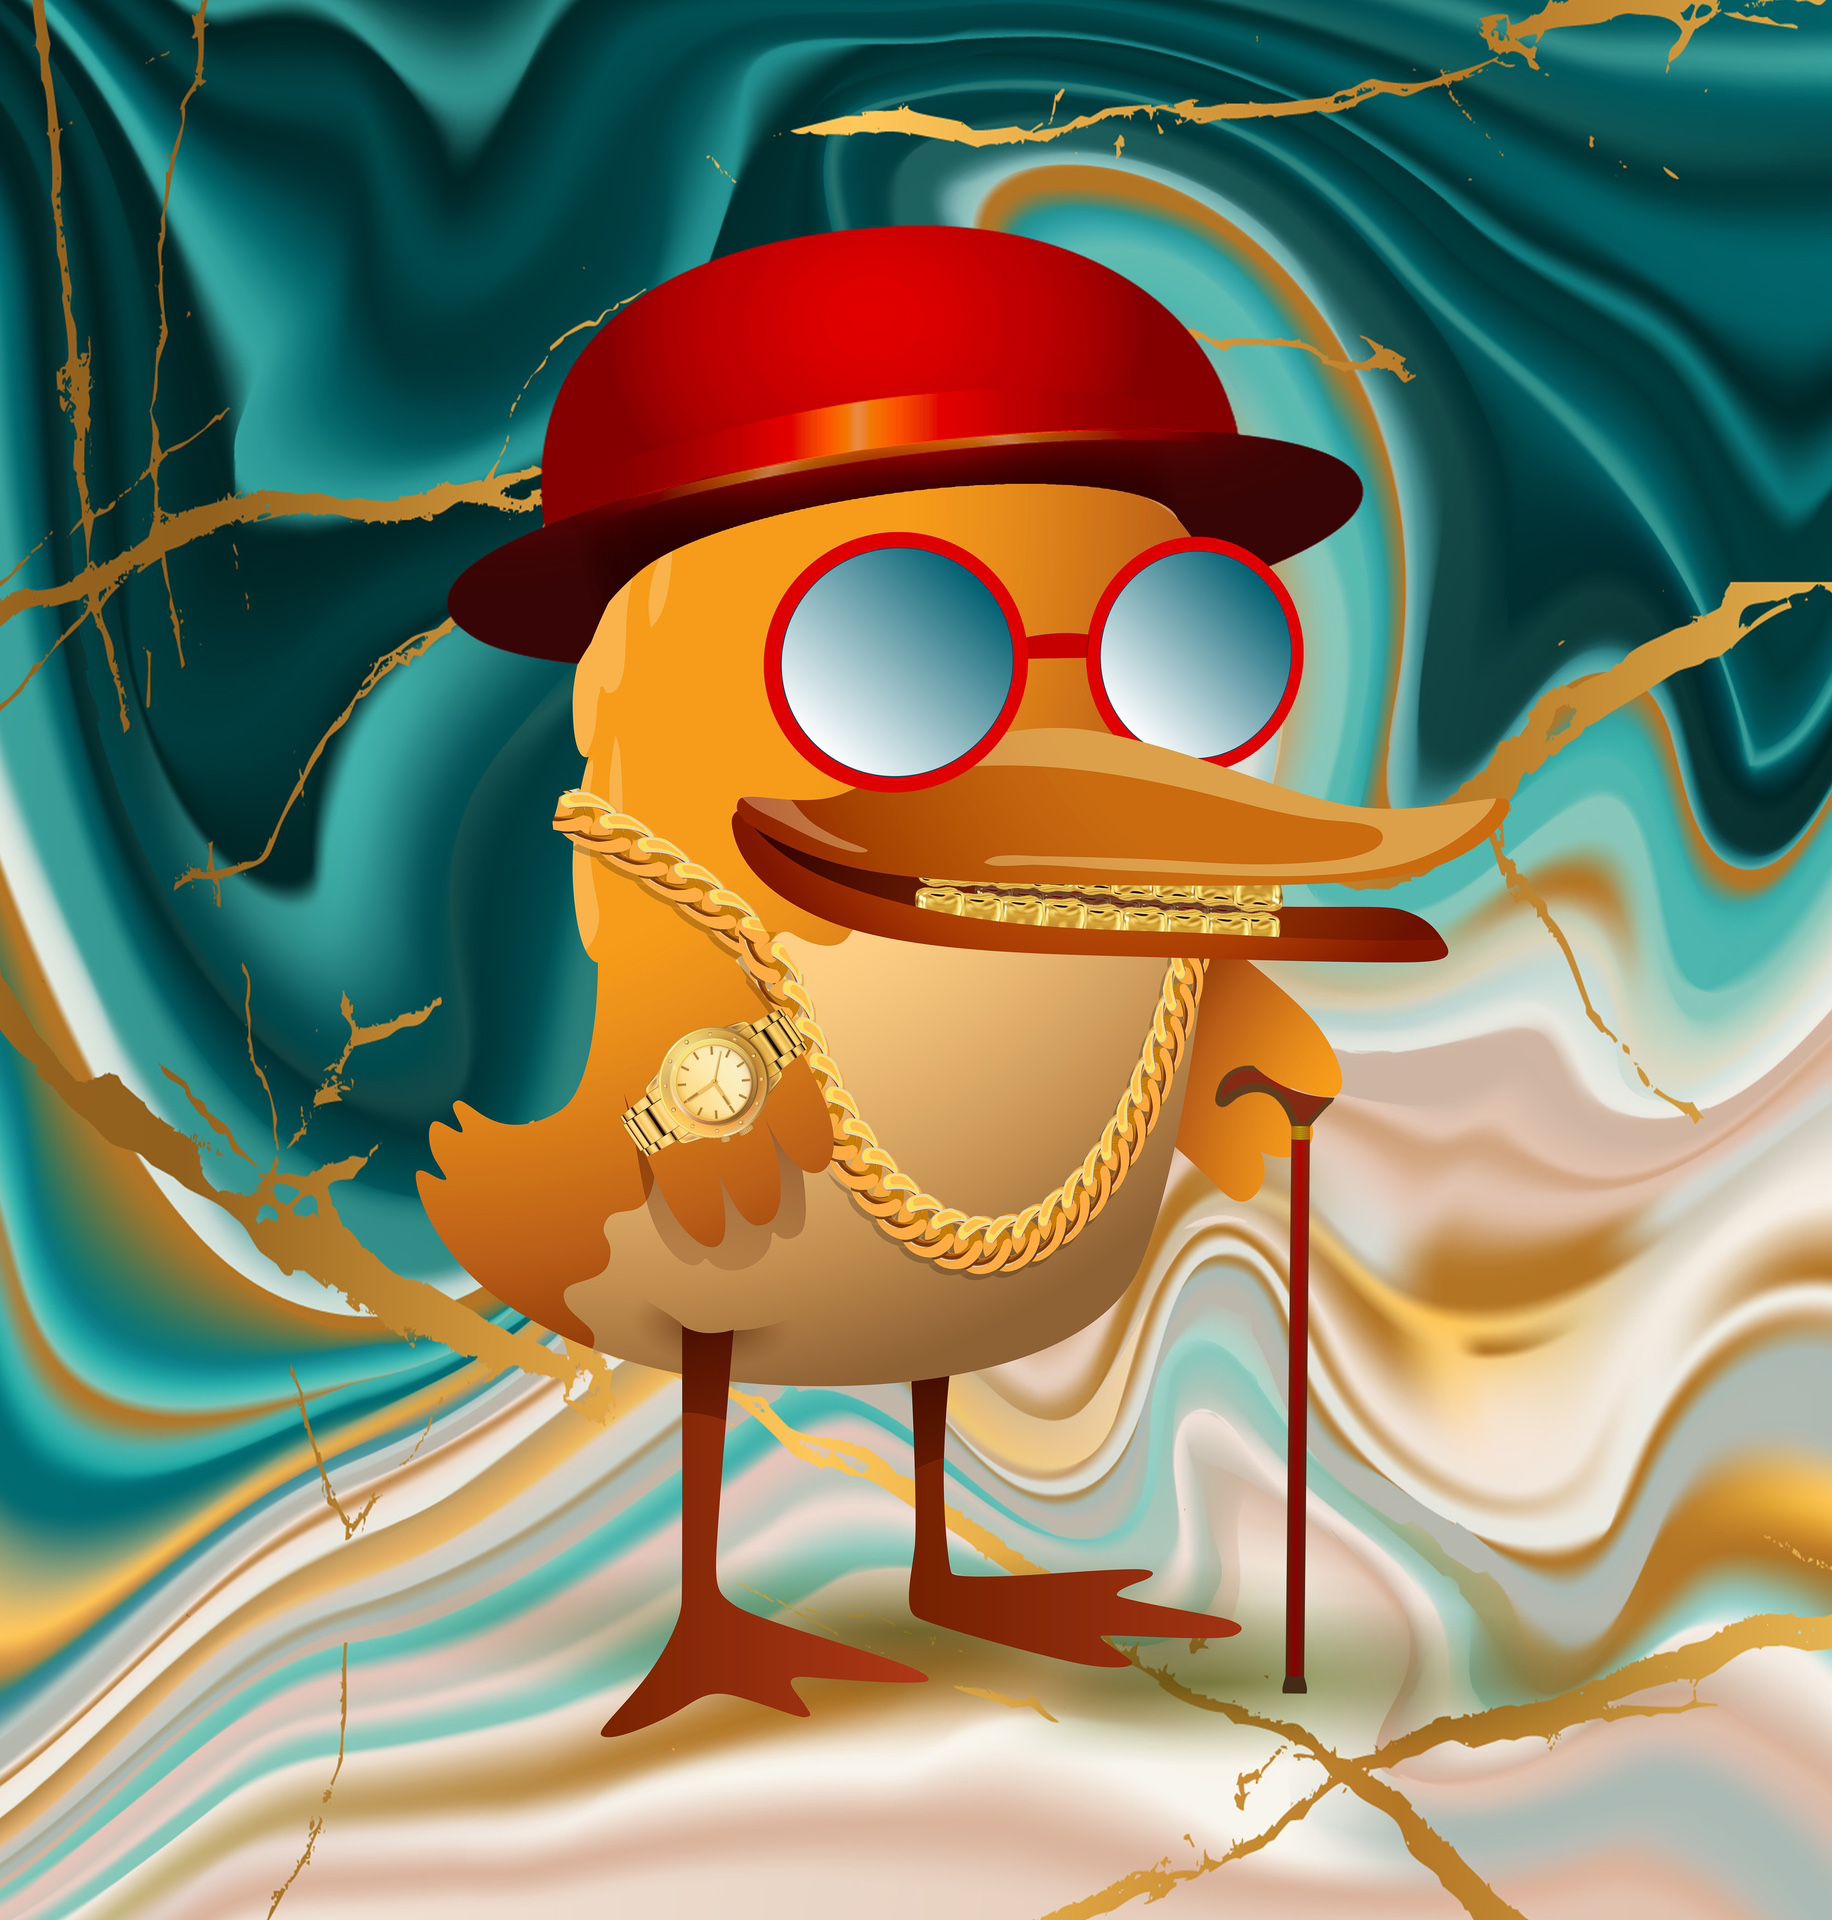 Drippy Birdz Framed Art 16”x32”